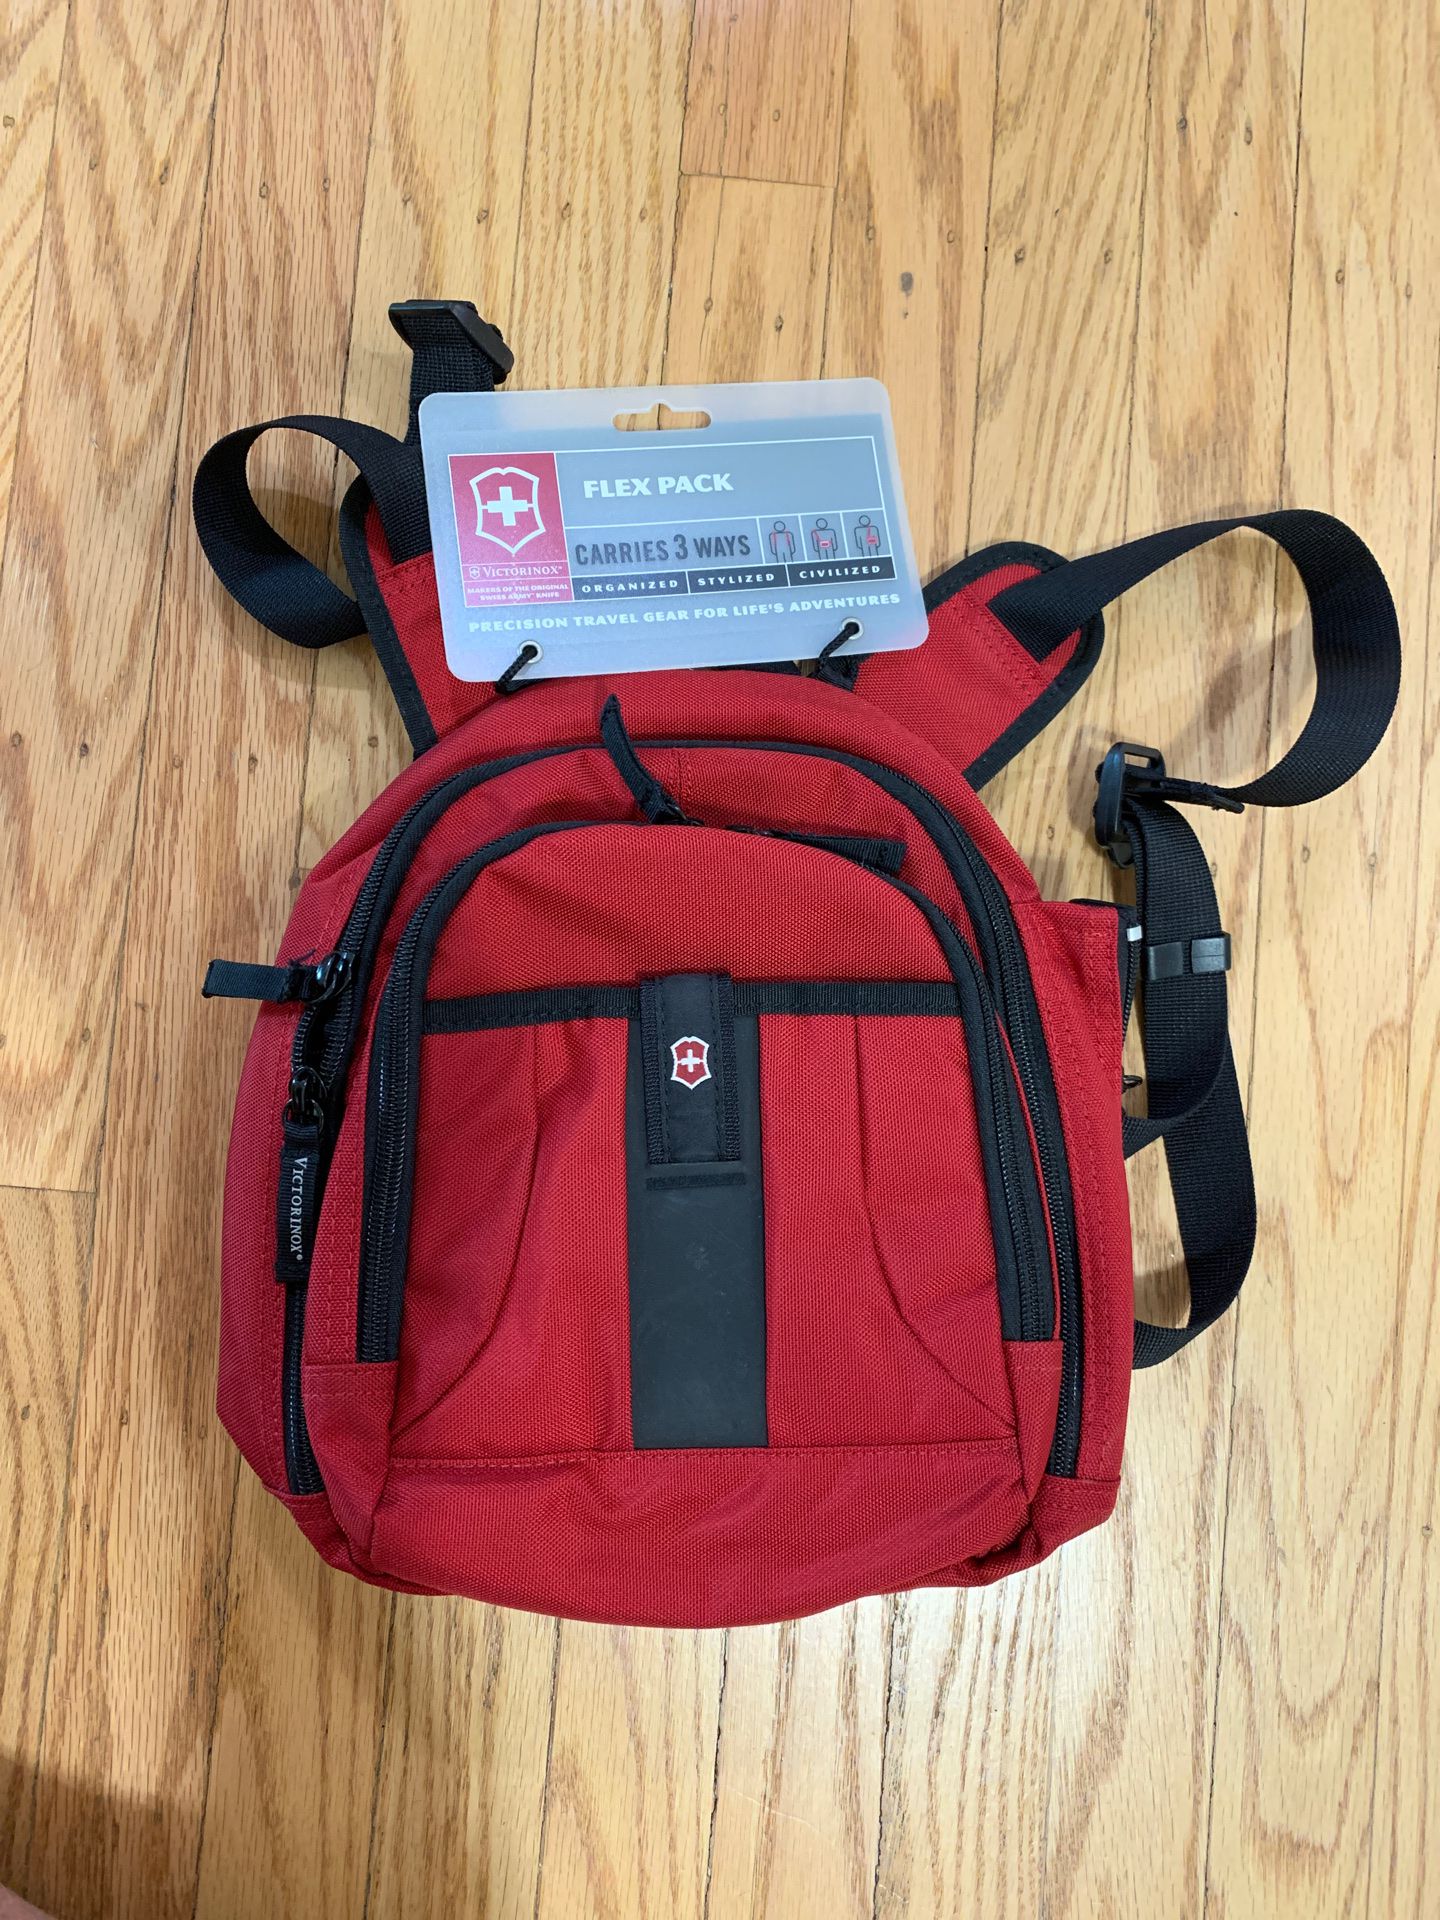 Swiss Army Victorinox Flex Pack Mini Backpack - NEW